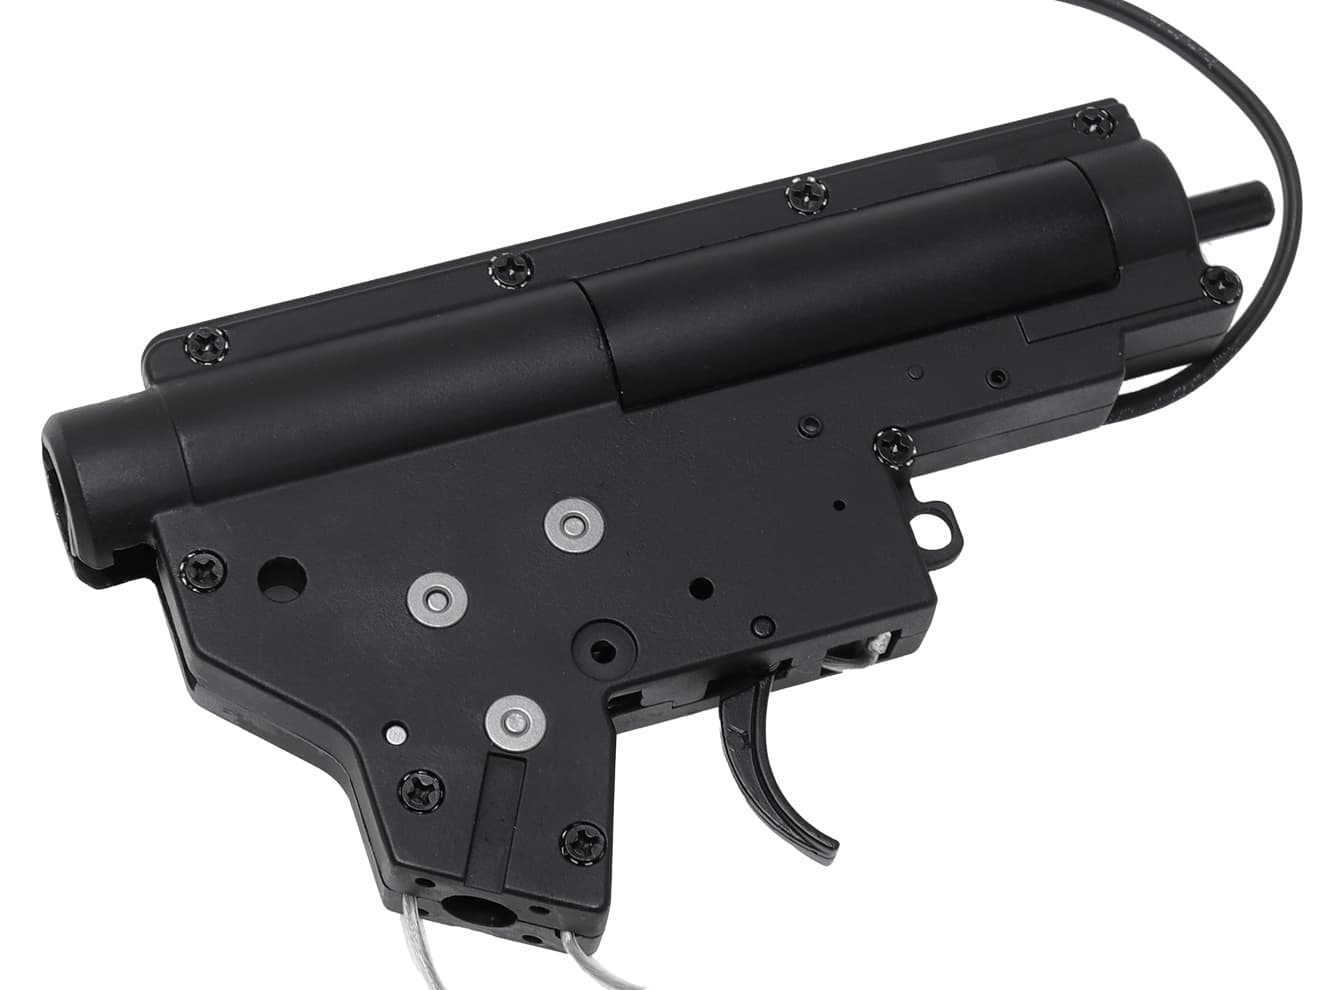 ZC-AMBX-012BF　ZC LEOPARD V2 QD スタンダード メカボックスCOMP 8mm 後方配線/MosFET for AEG M4